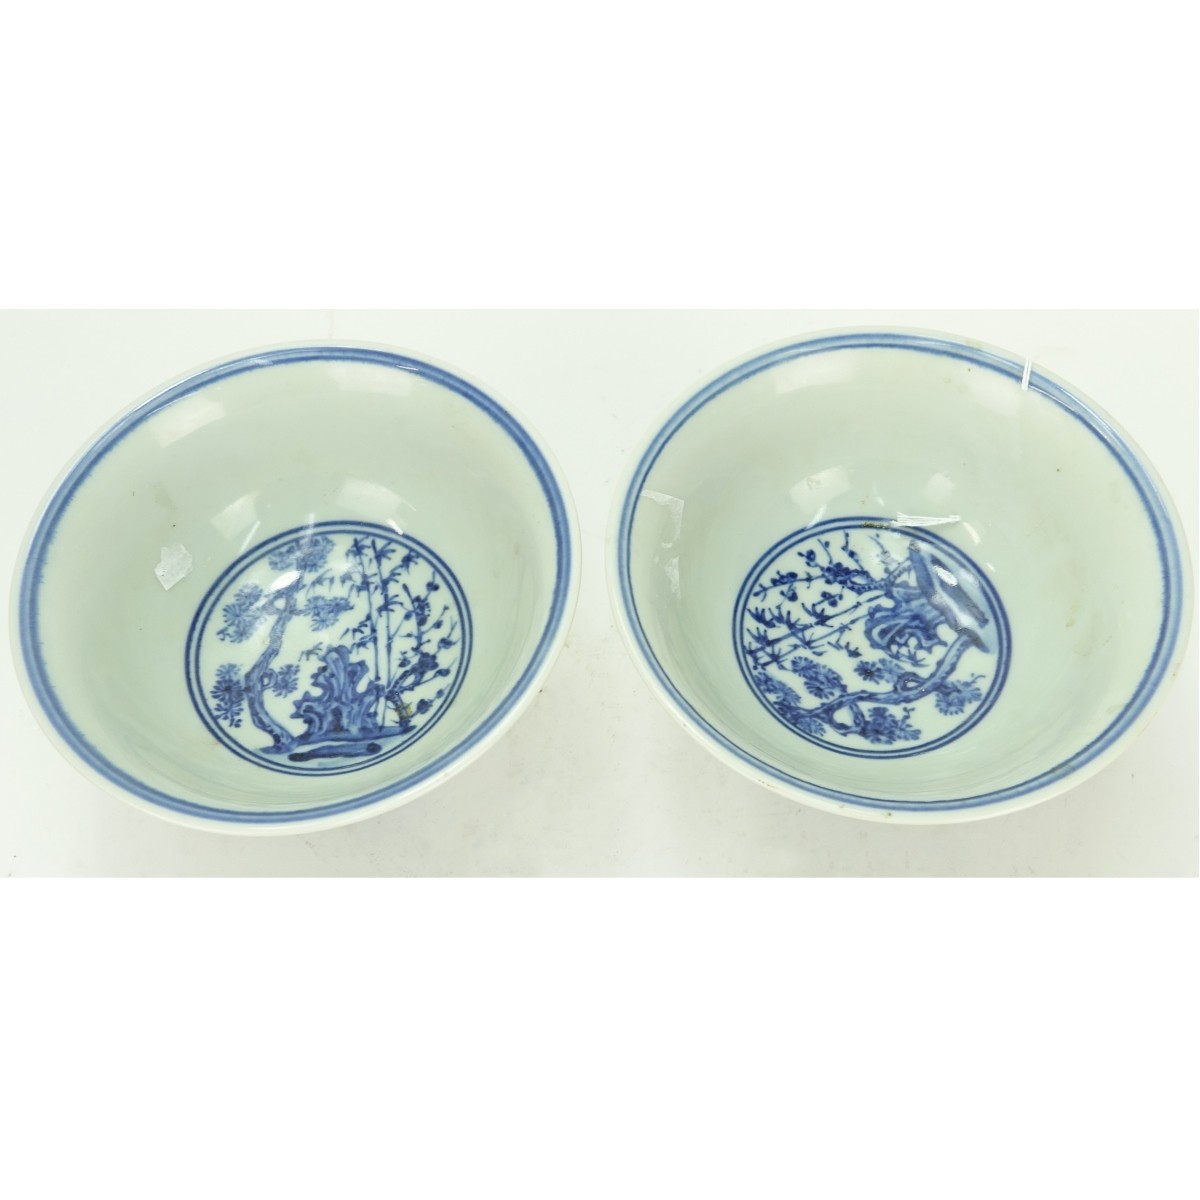 Chinese Pedestal Bowls